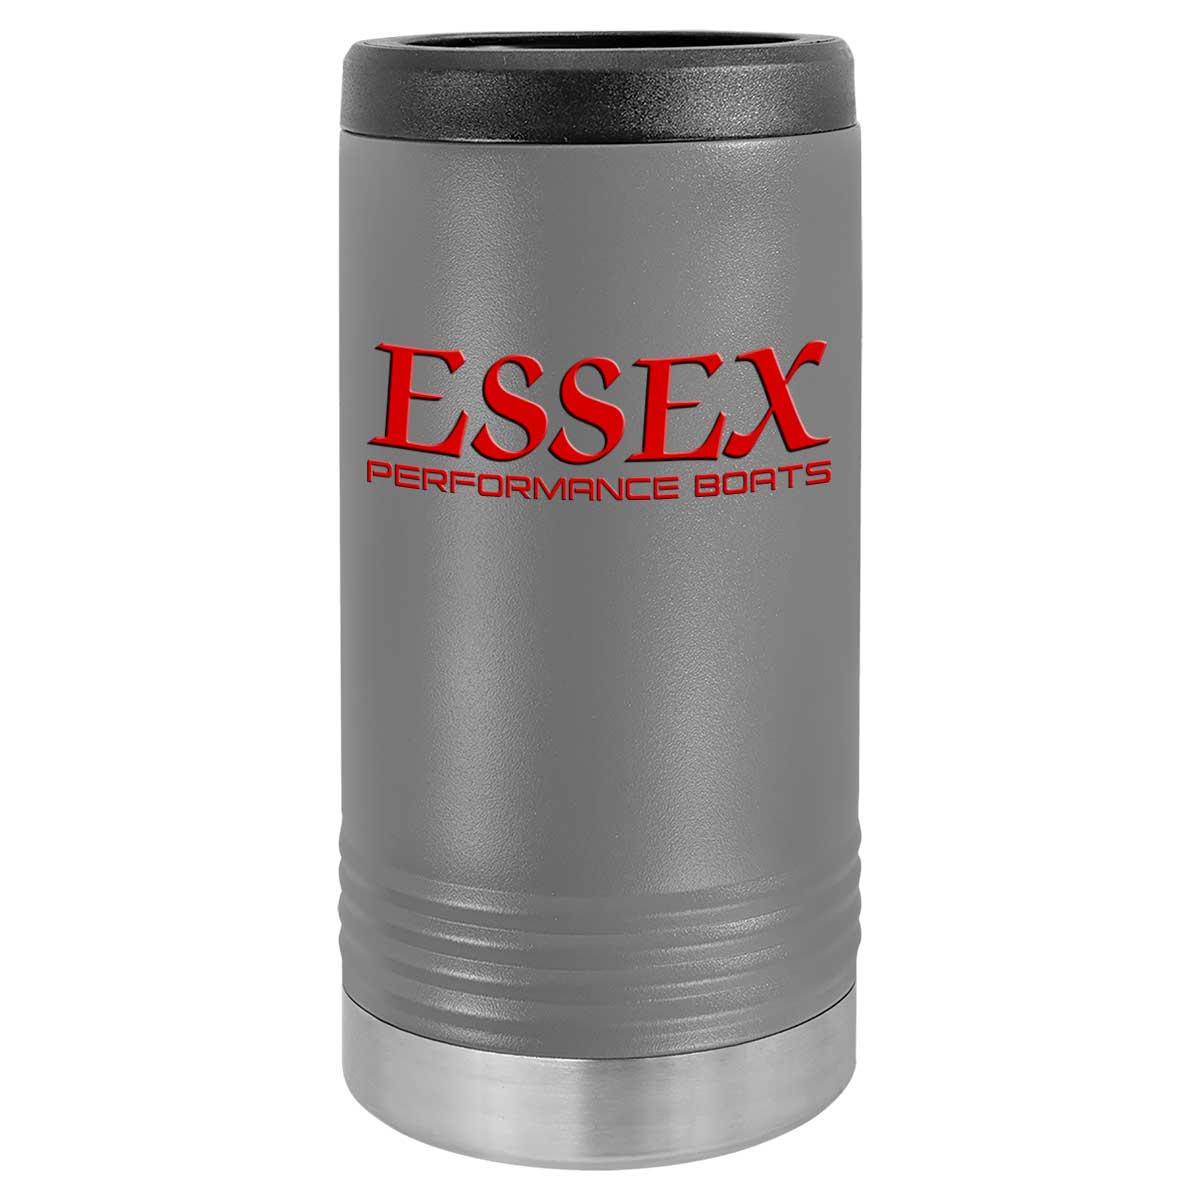 Essex Performance Boats - SLIM Vacuum Insulated Beverage Holder